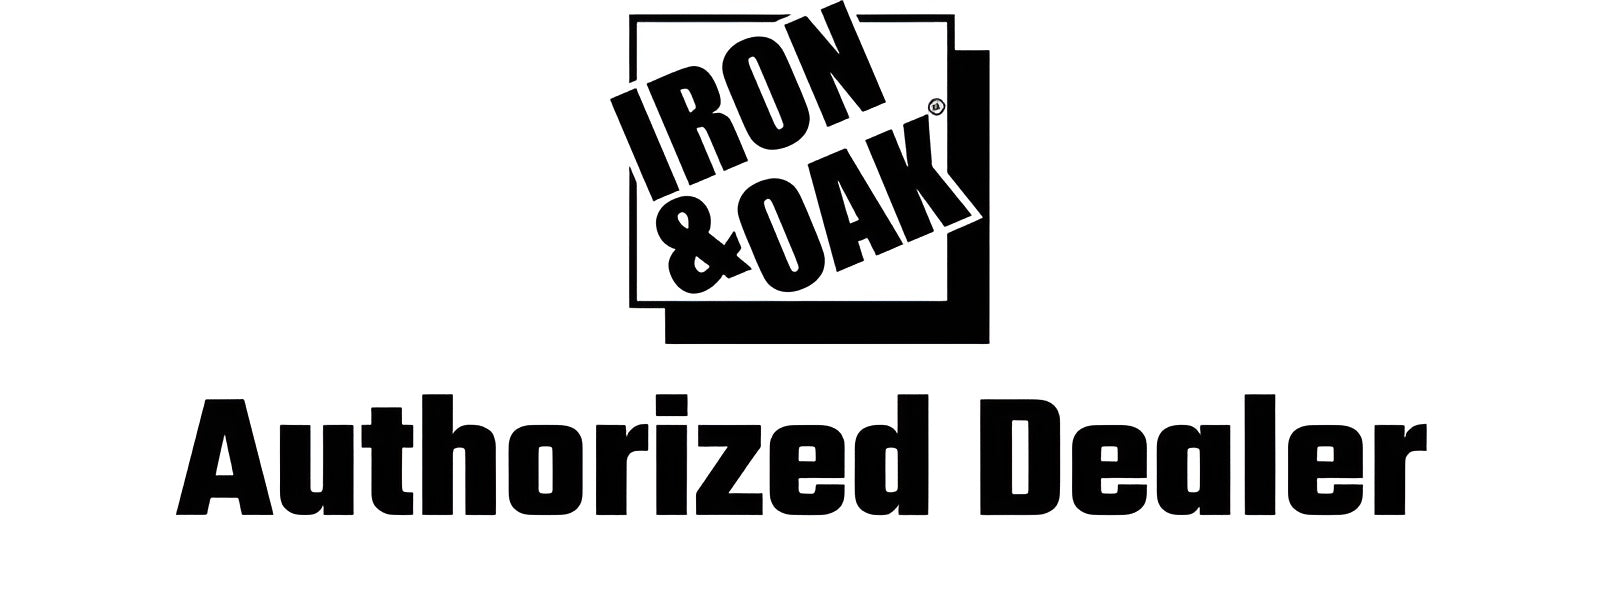 Iron & Oak Authorized Dealer Badge